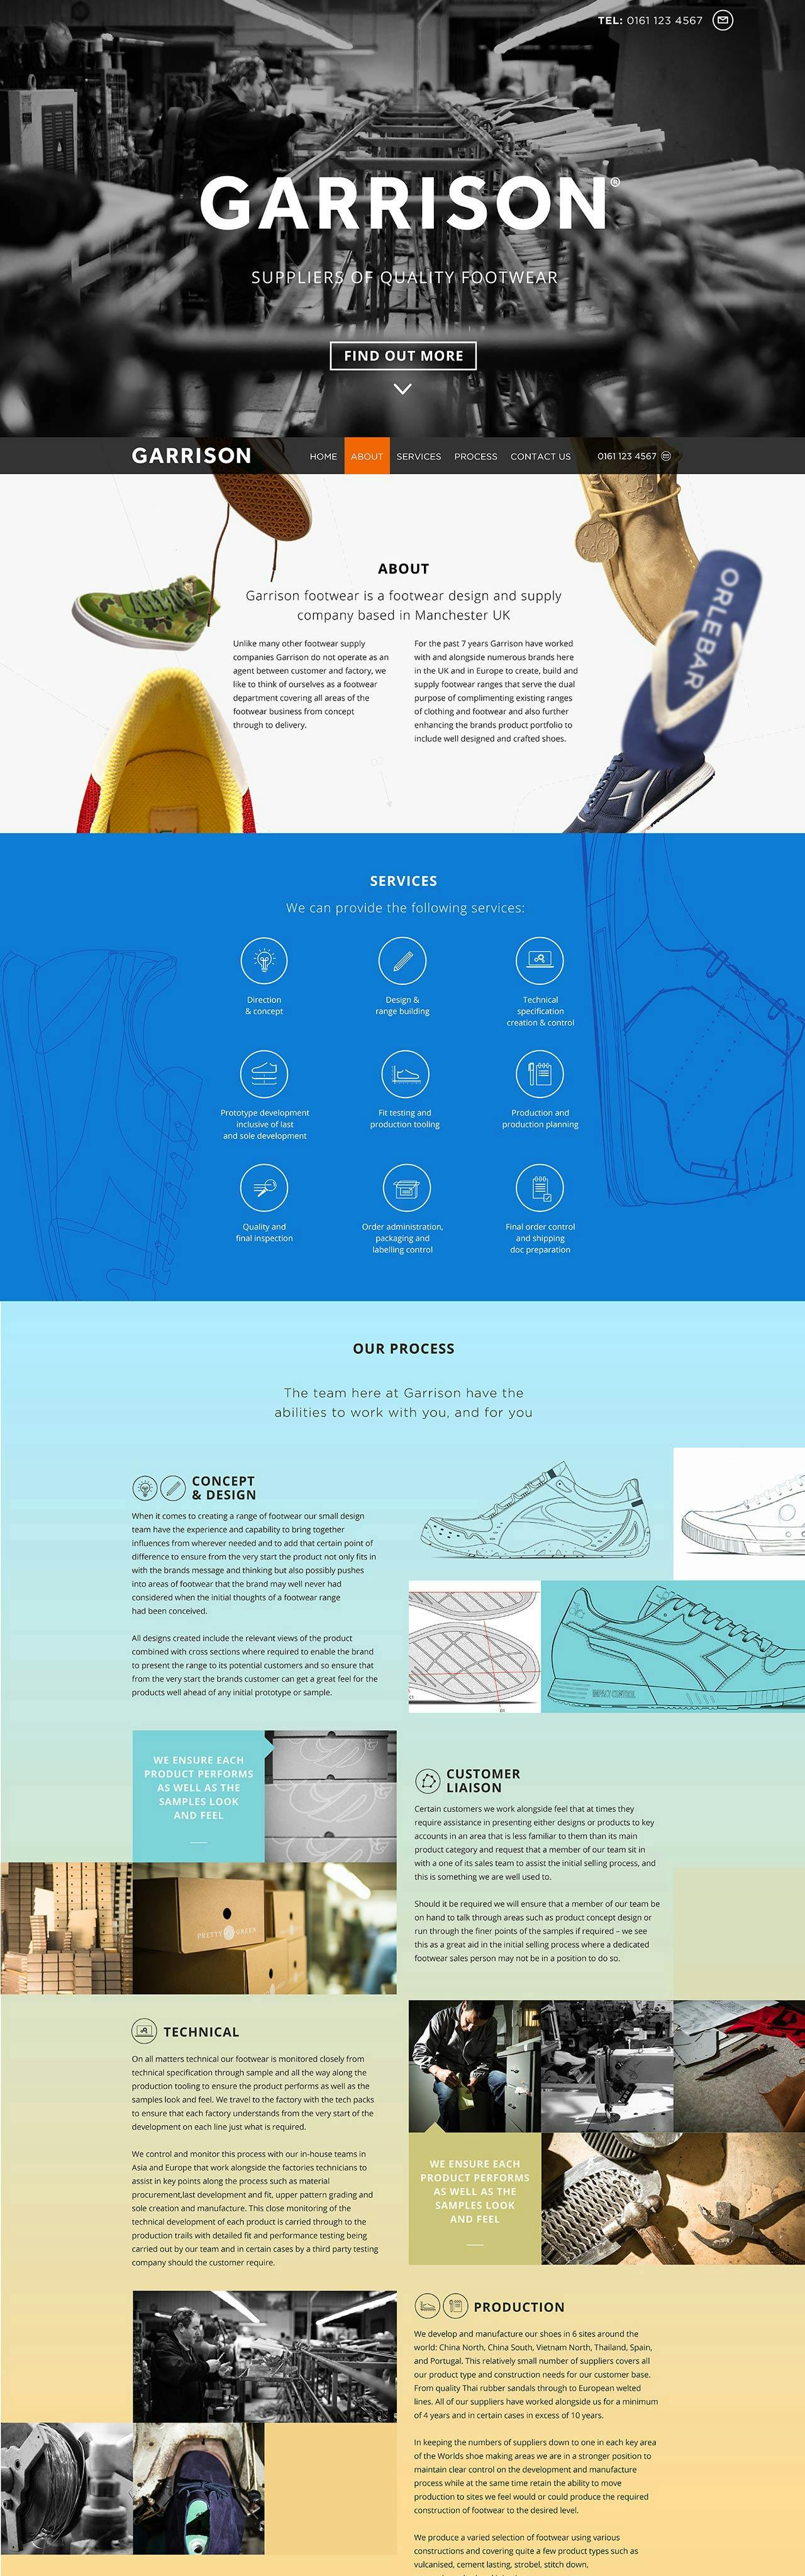 Garrison Footwear Website Screenshot